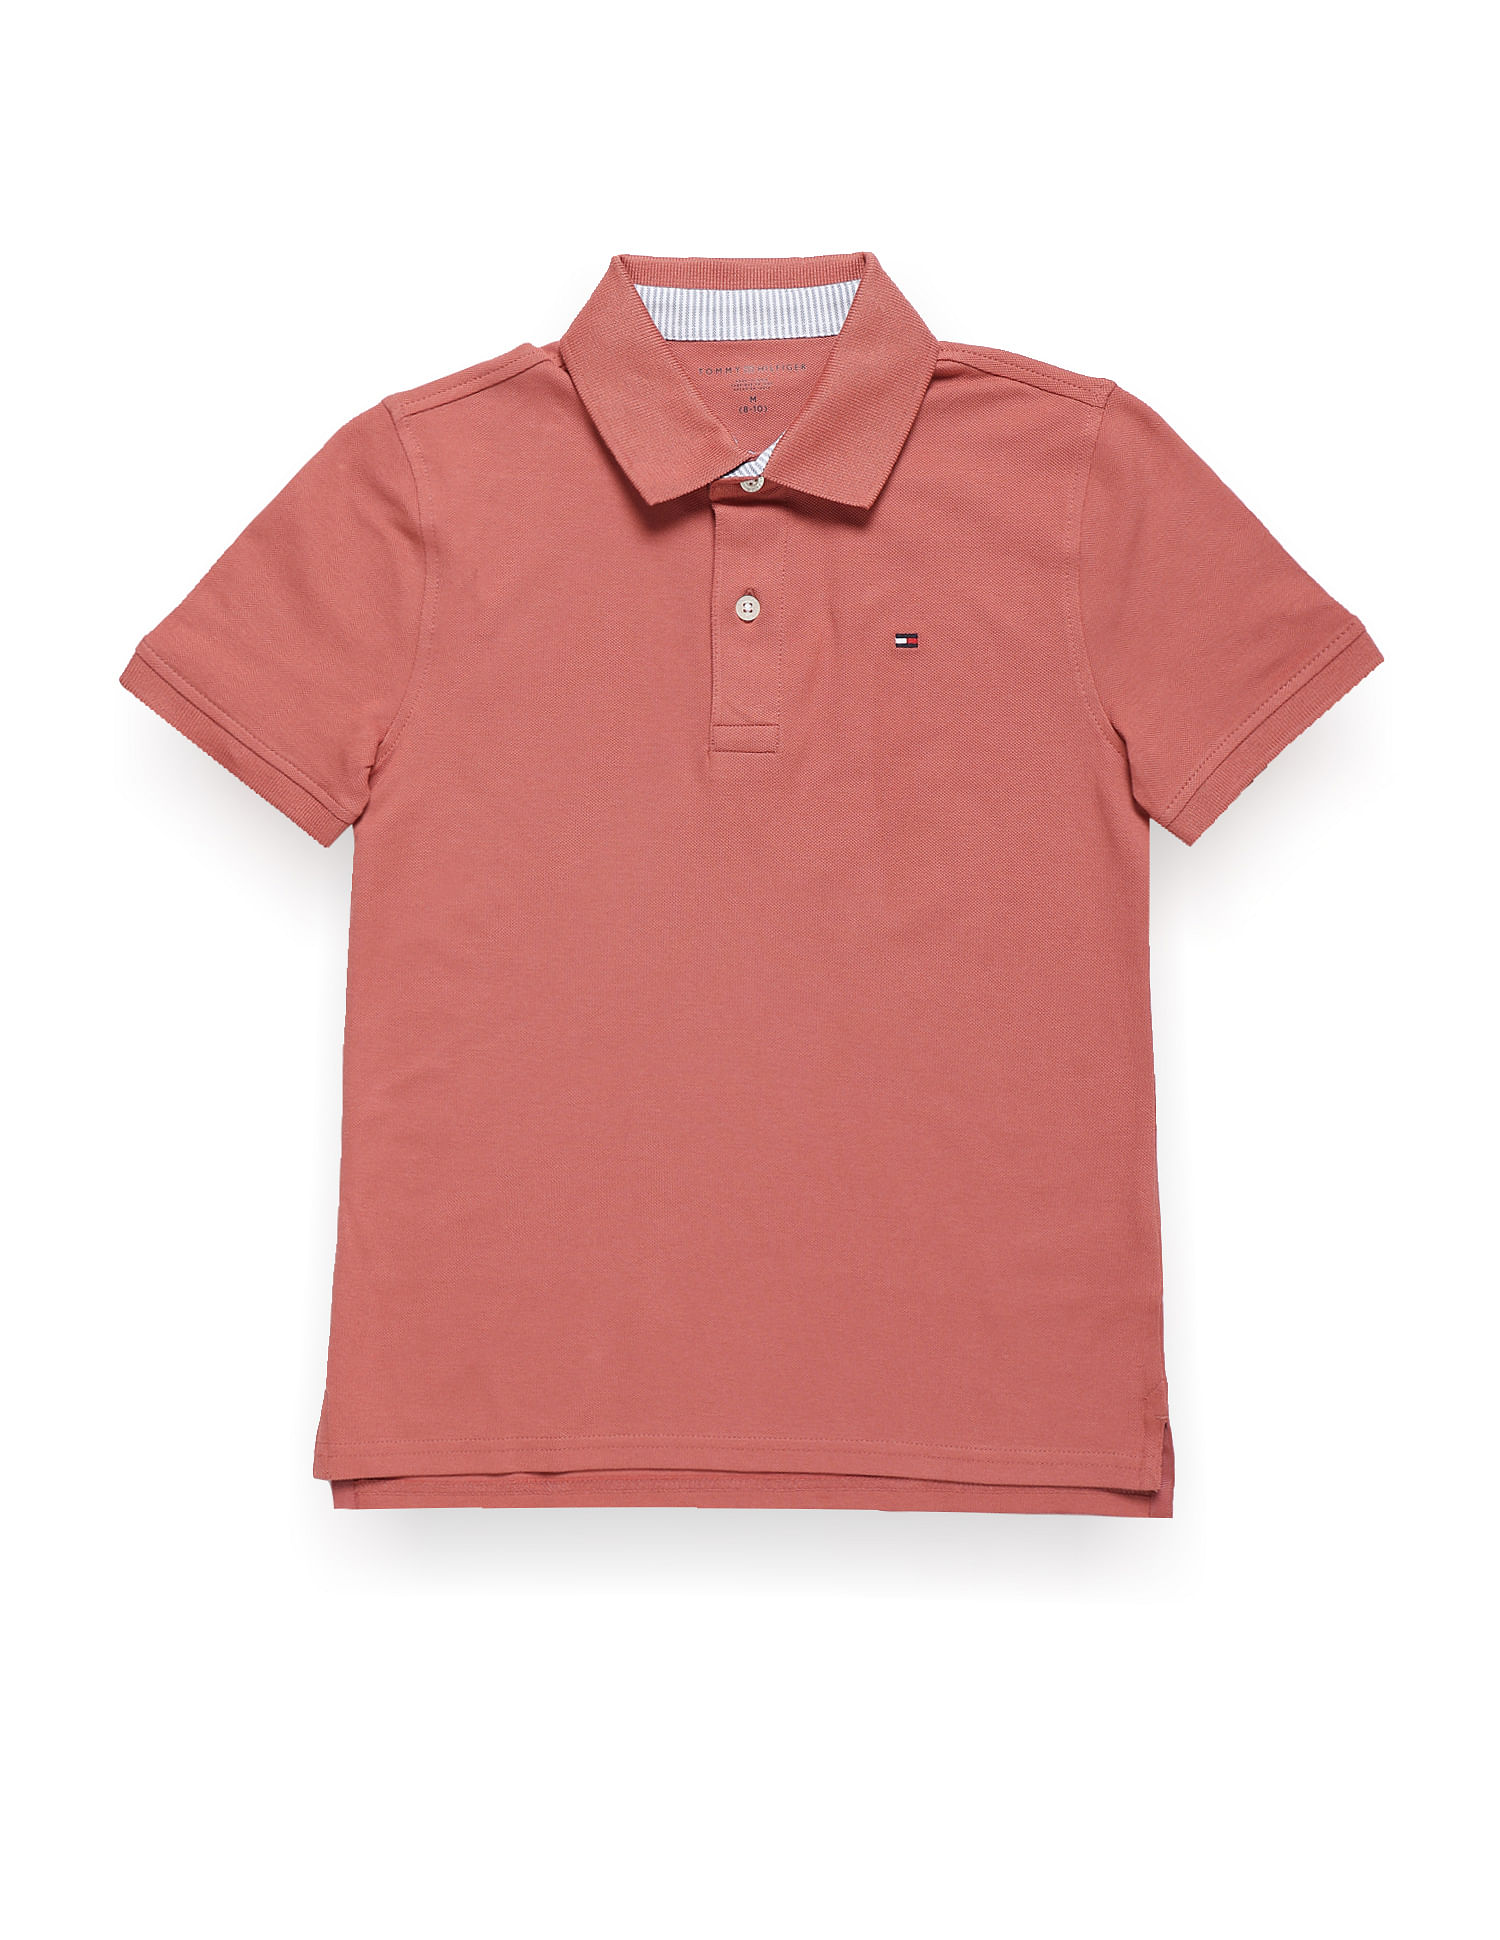 Twinkle Kids - Boys Super Soft Cotton Polo T-Shirt - Pink